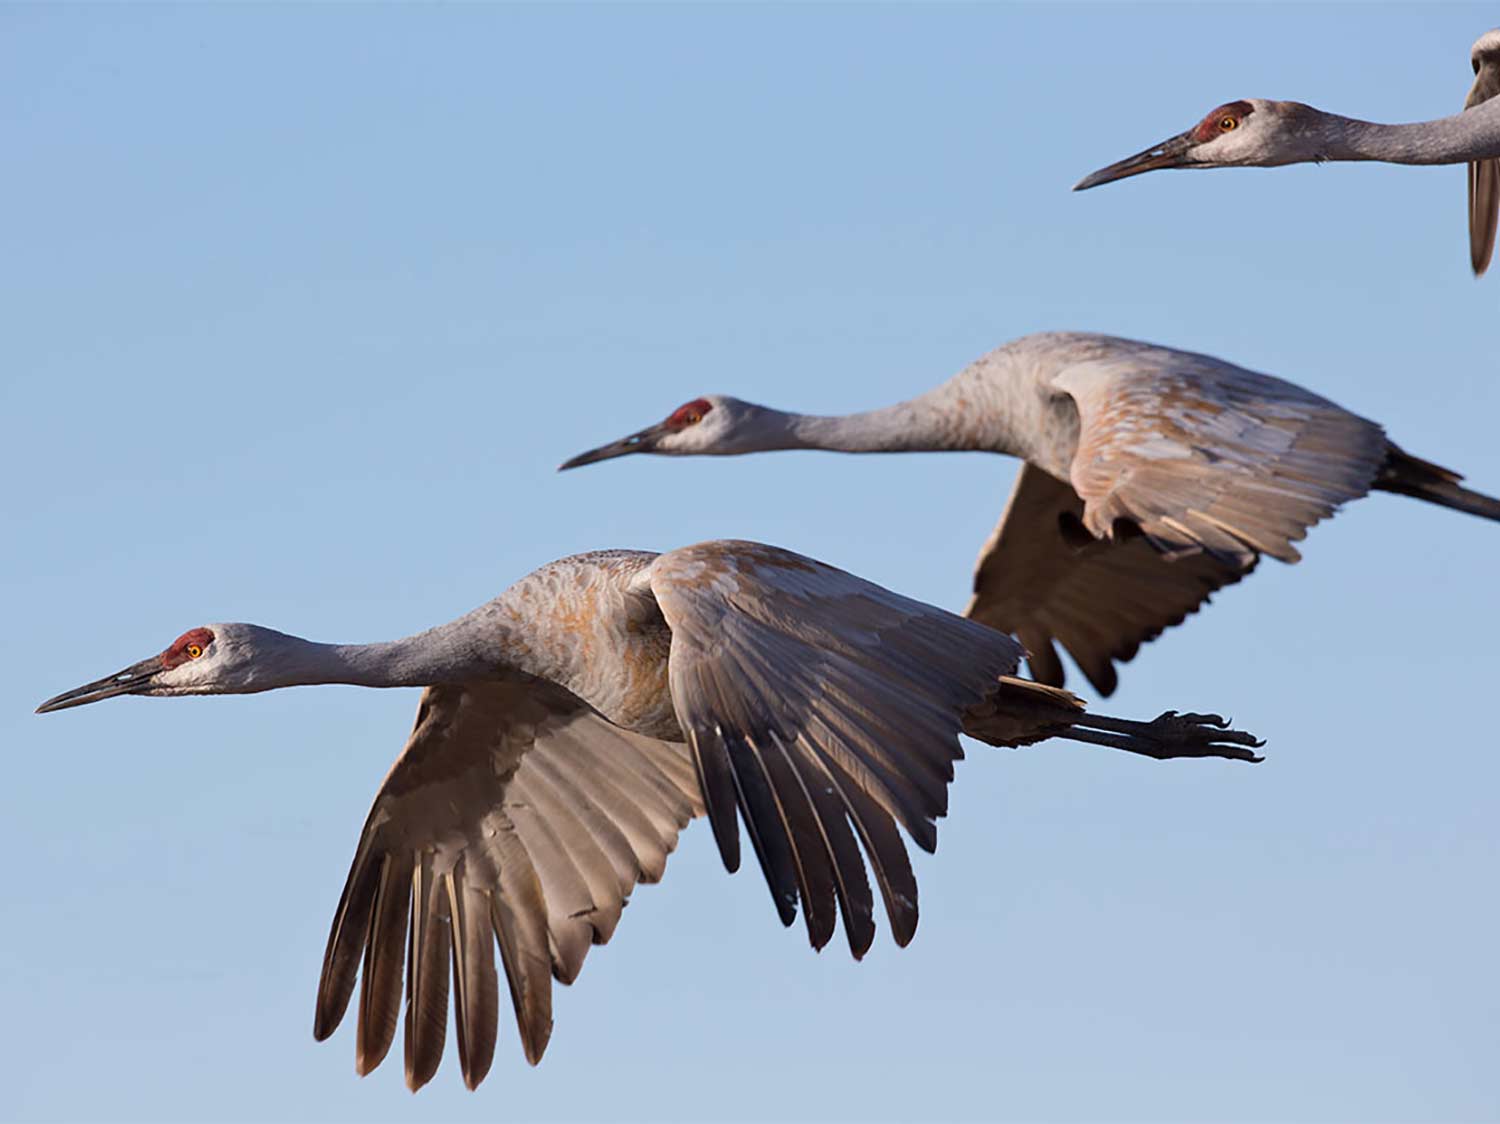 Three sandhill cranes in flight against a clear blue sky.